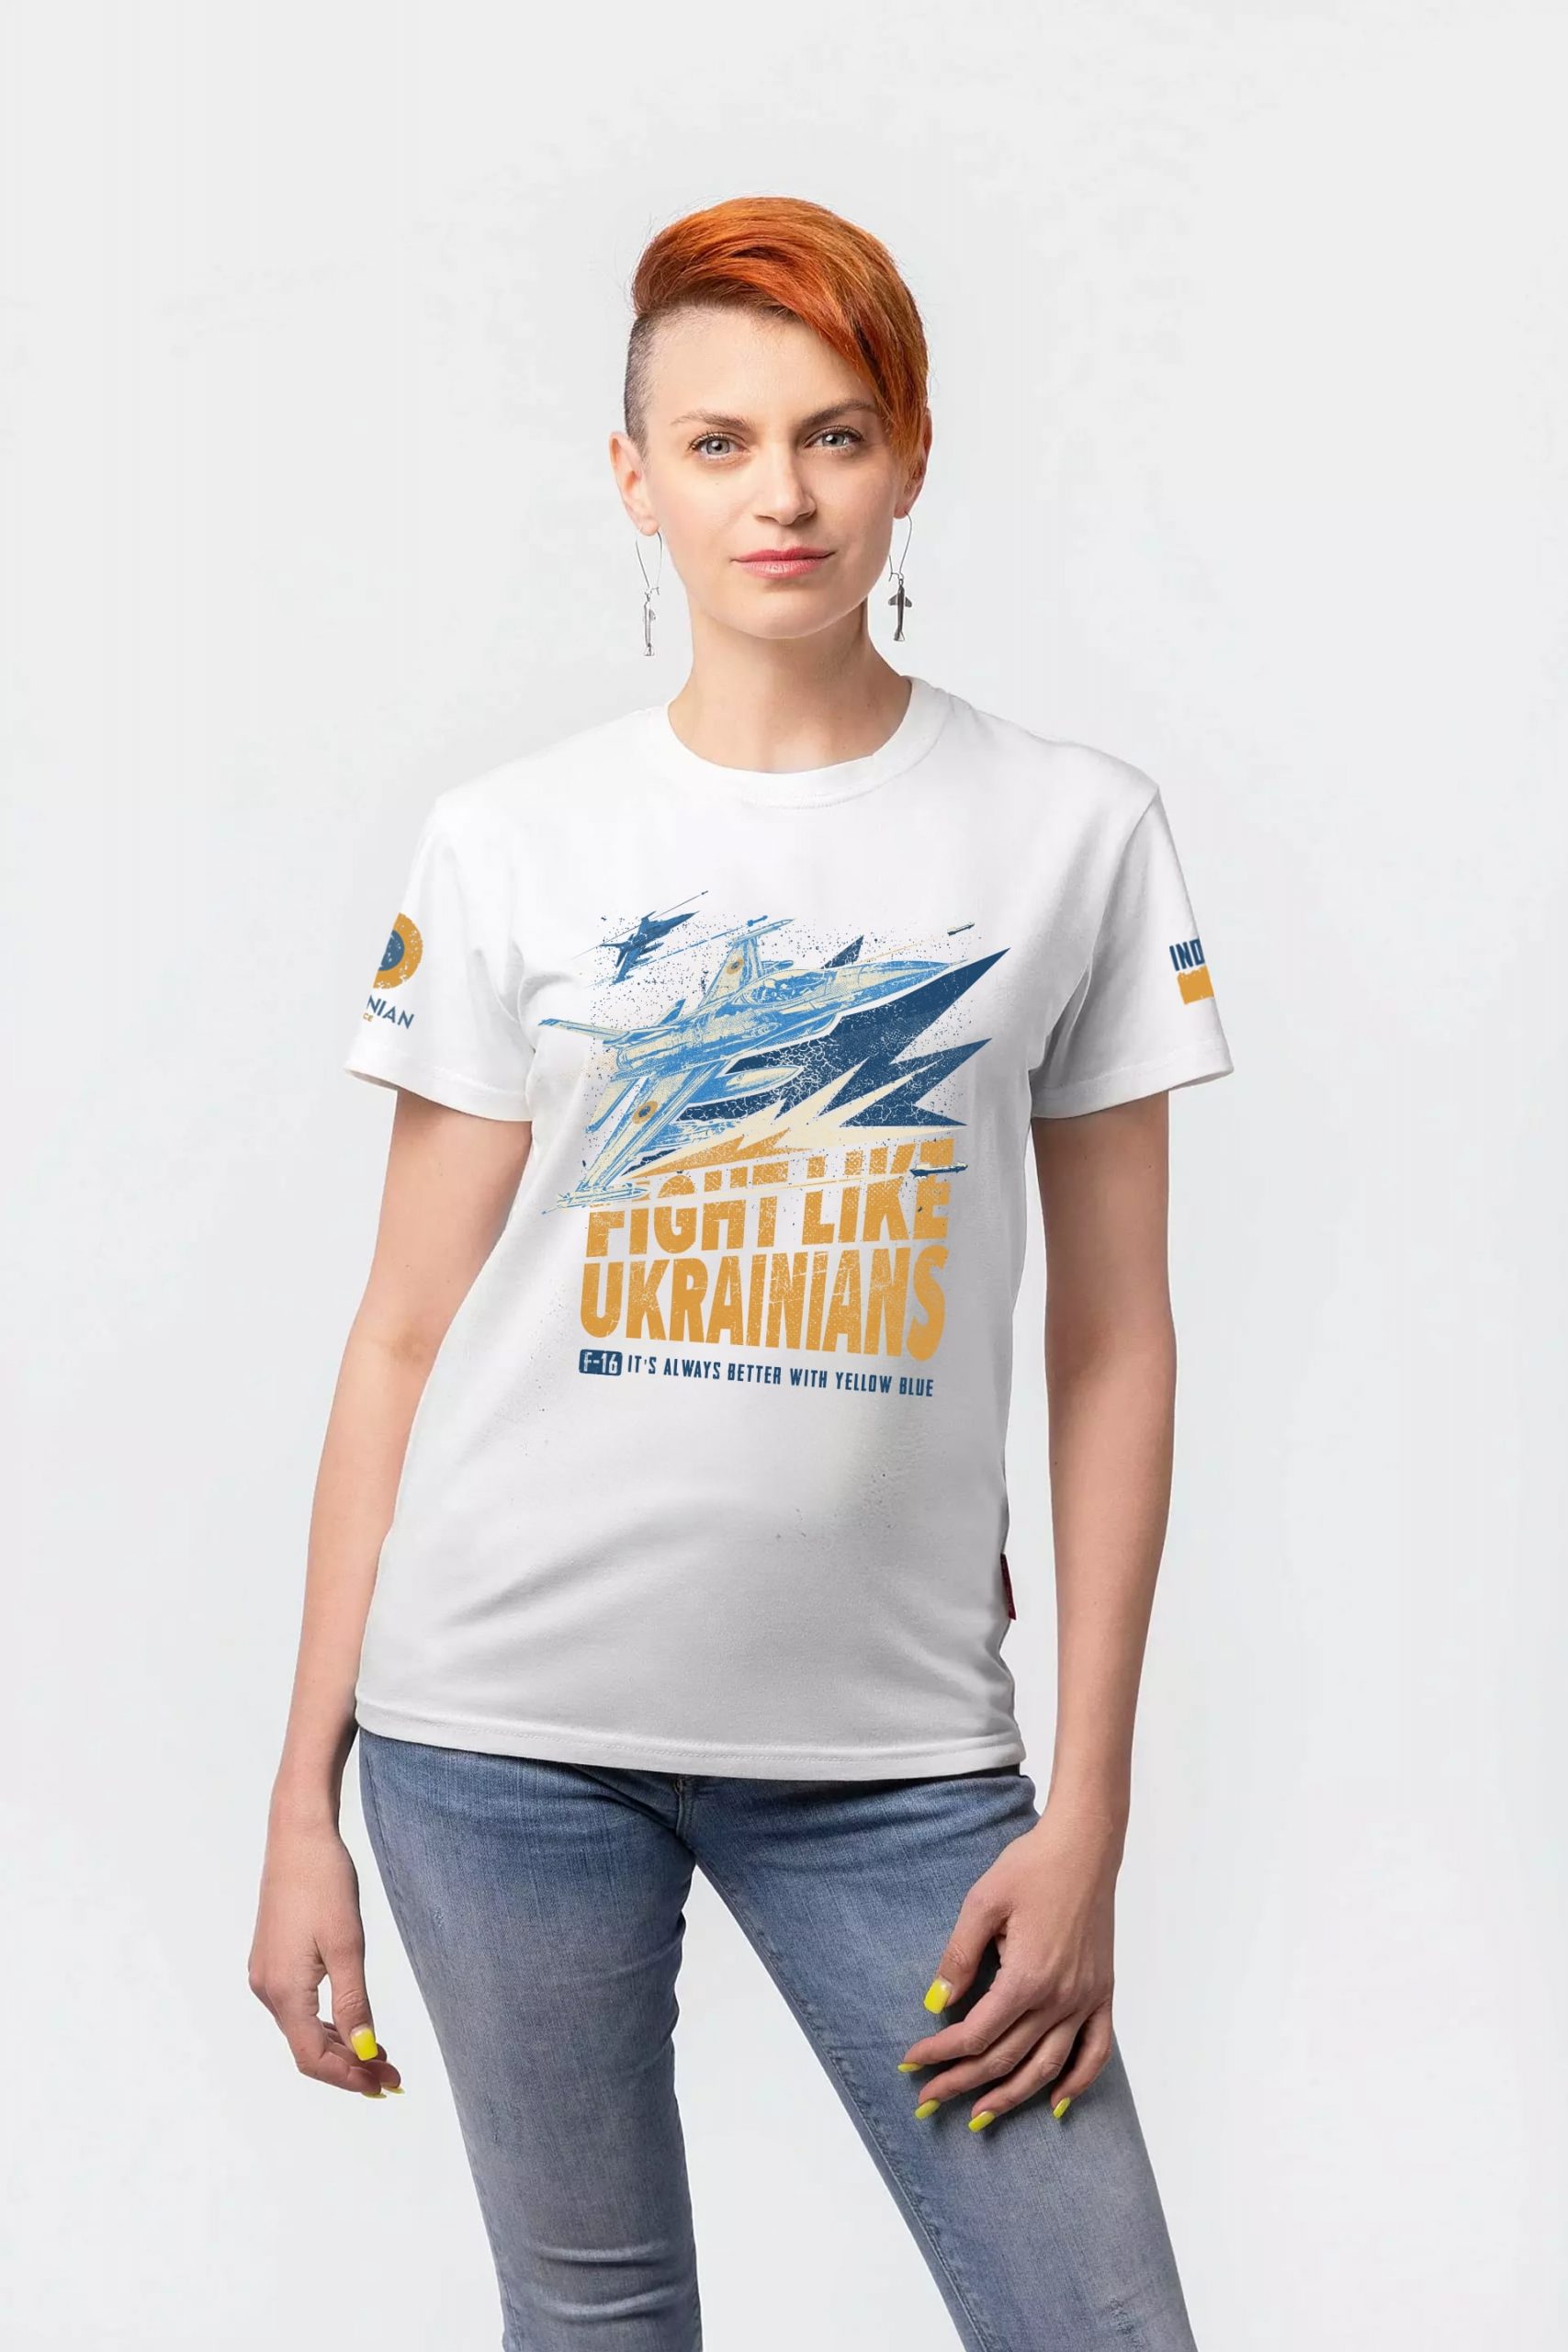 Women's T-Shirt F-16. Fight Like Ukrainians. Color off-white. .